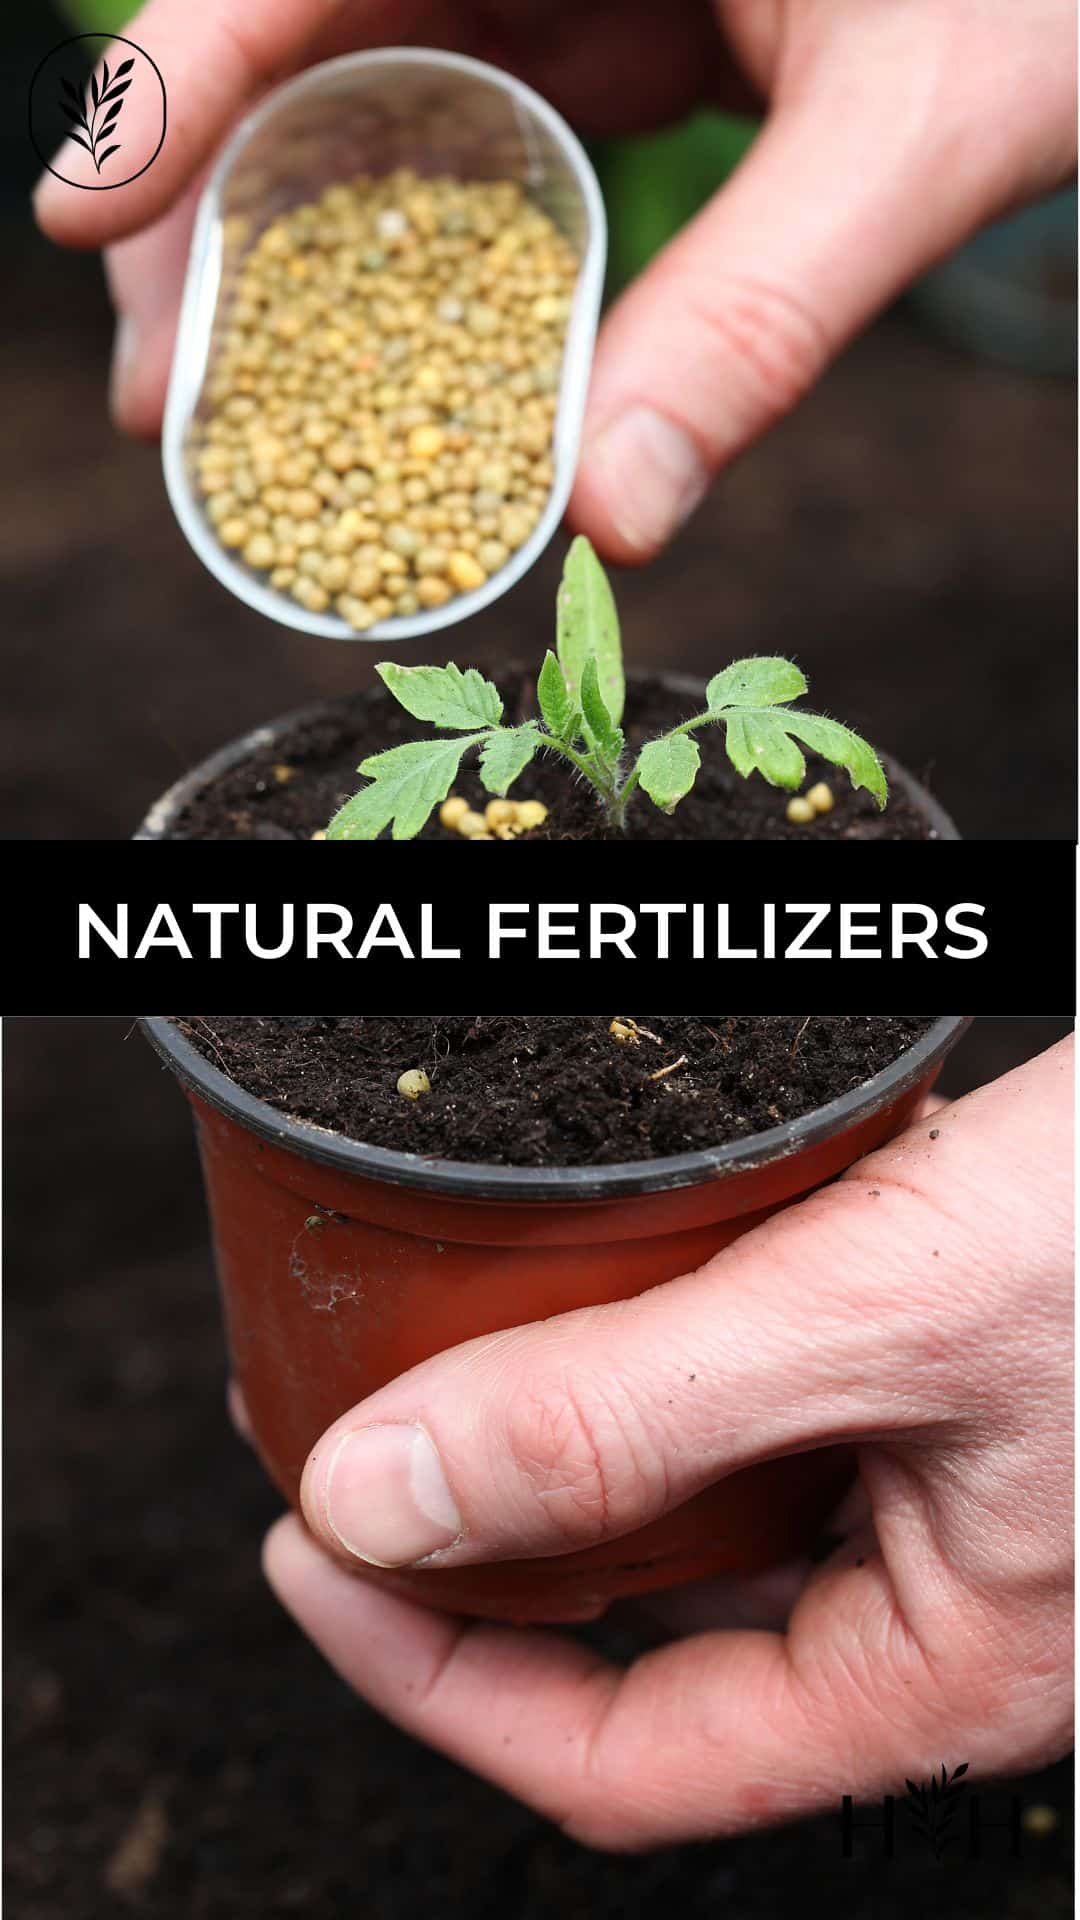 Natural fertilizers via @home4theharvest